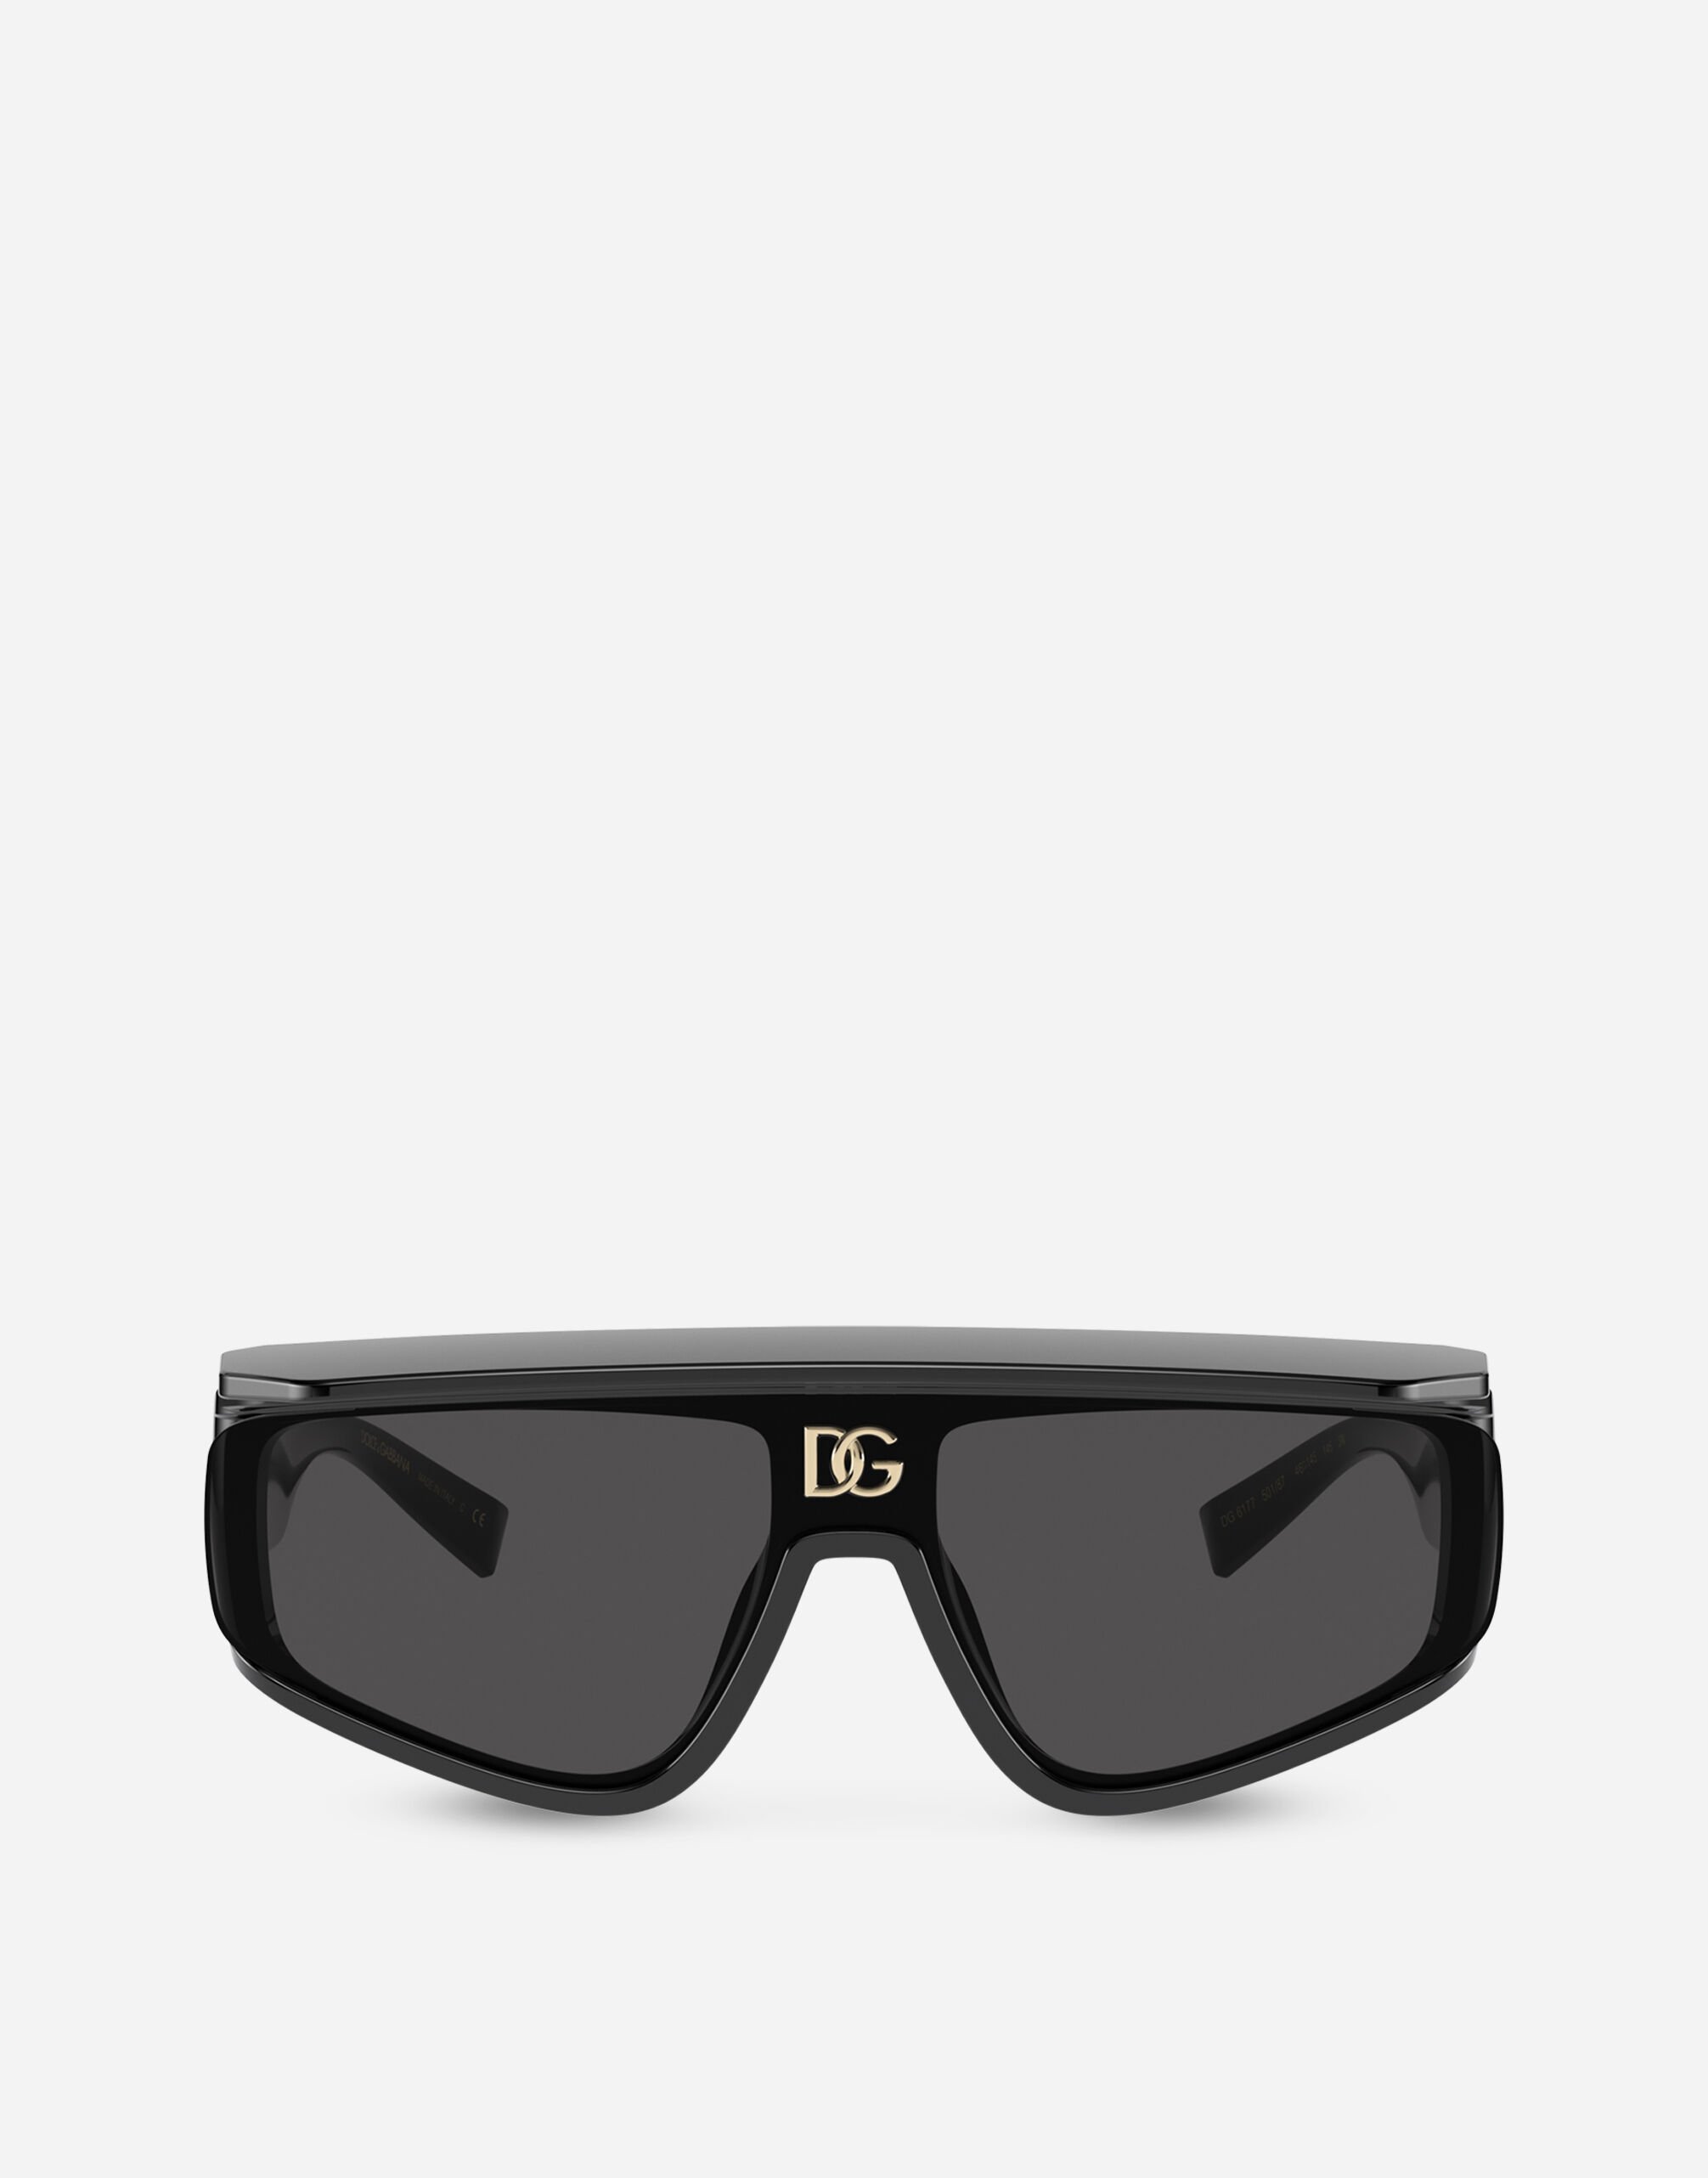 Dolce & Gabbana DG crossed sunglasses Gold WEN6L3W1111